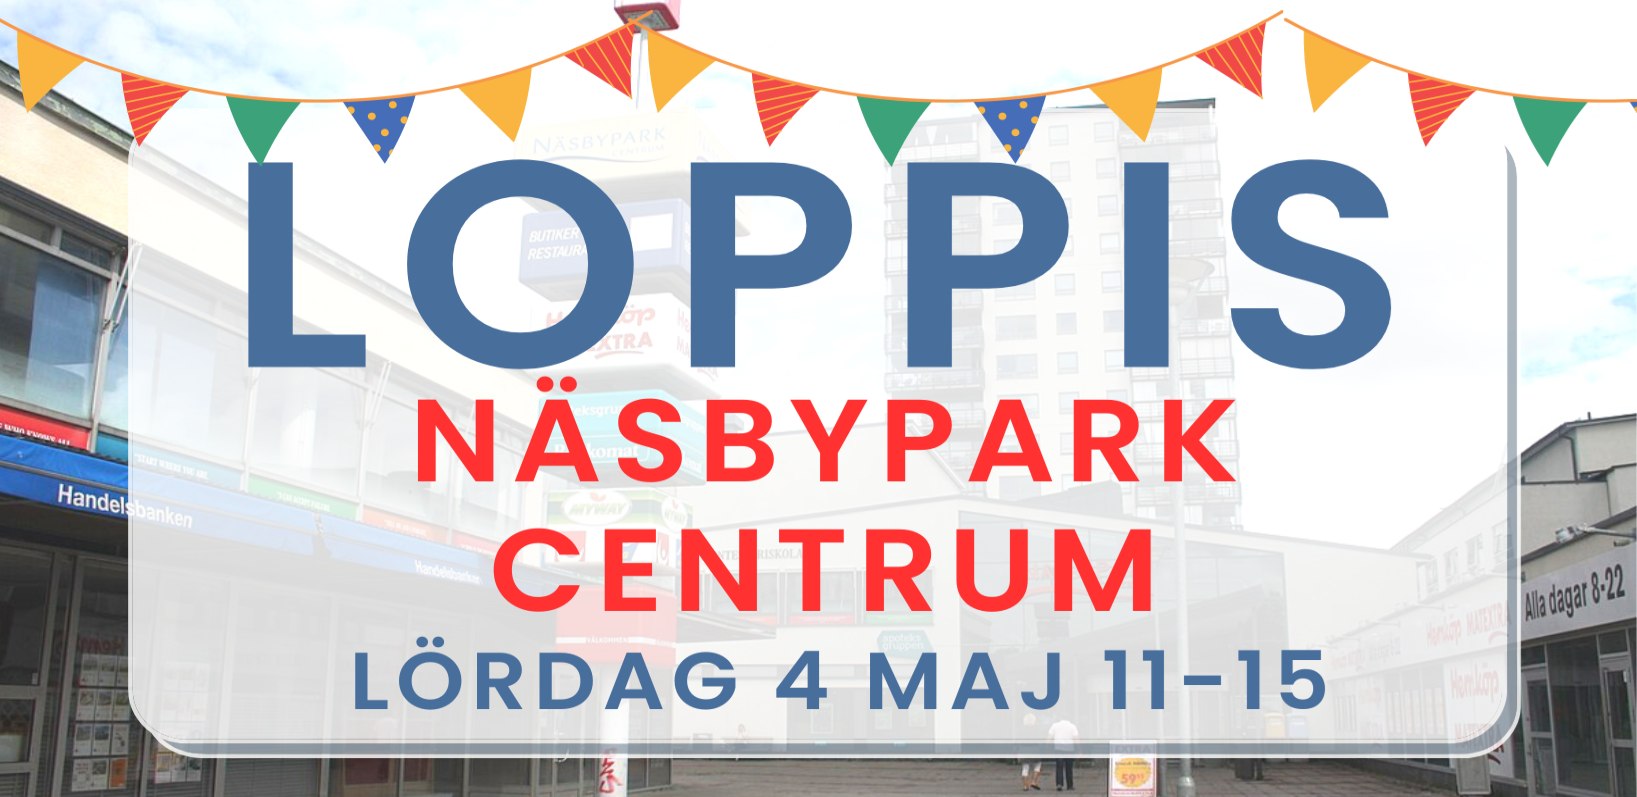 Loppis i Näsby Park Centrum 4 maj